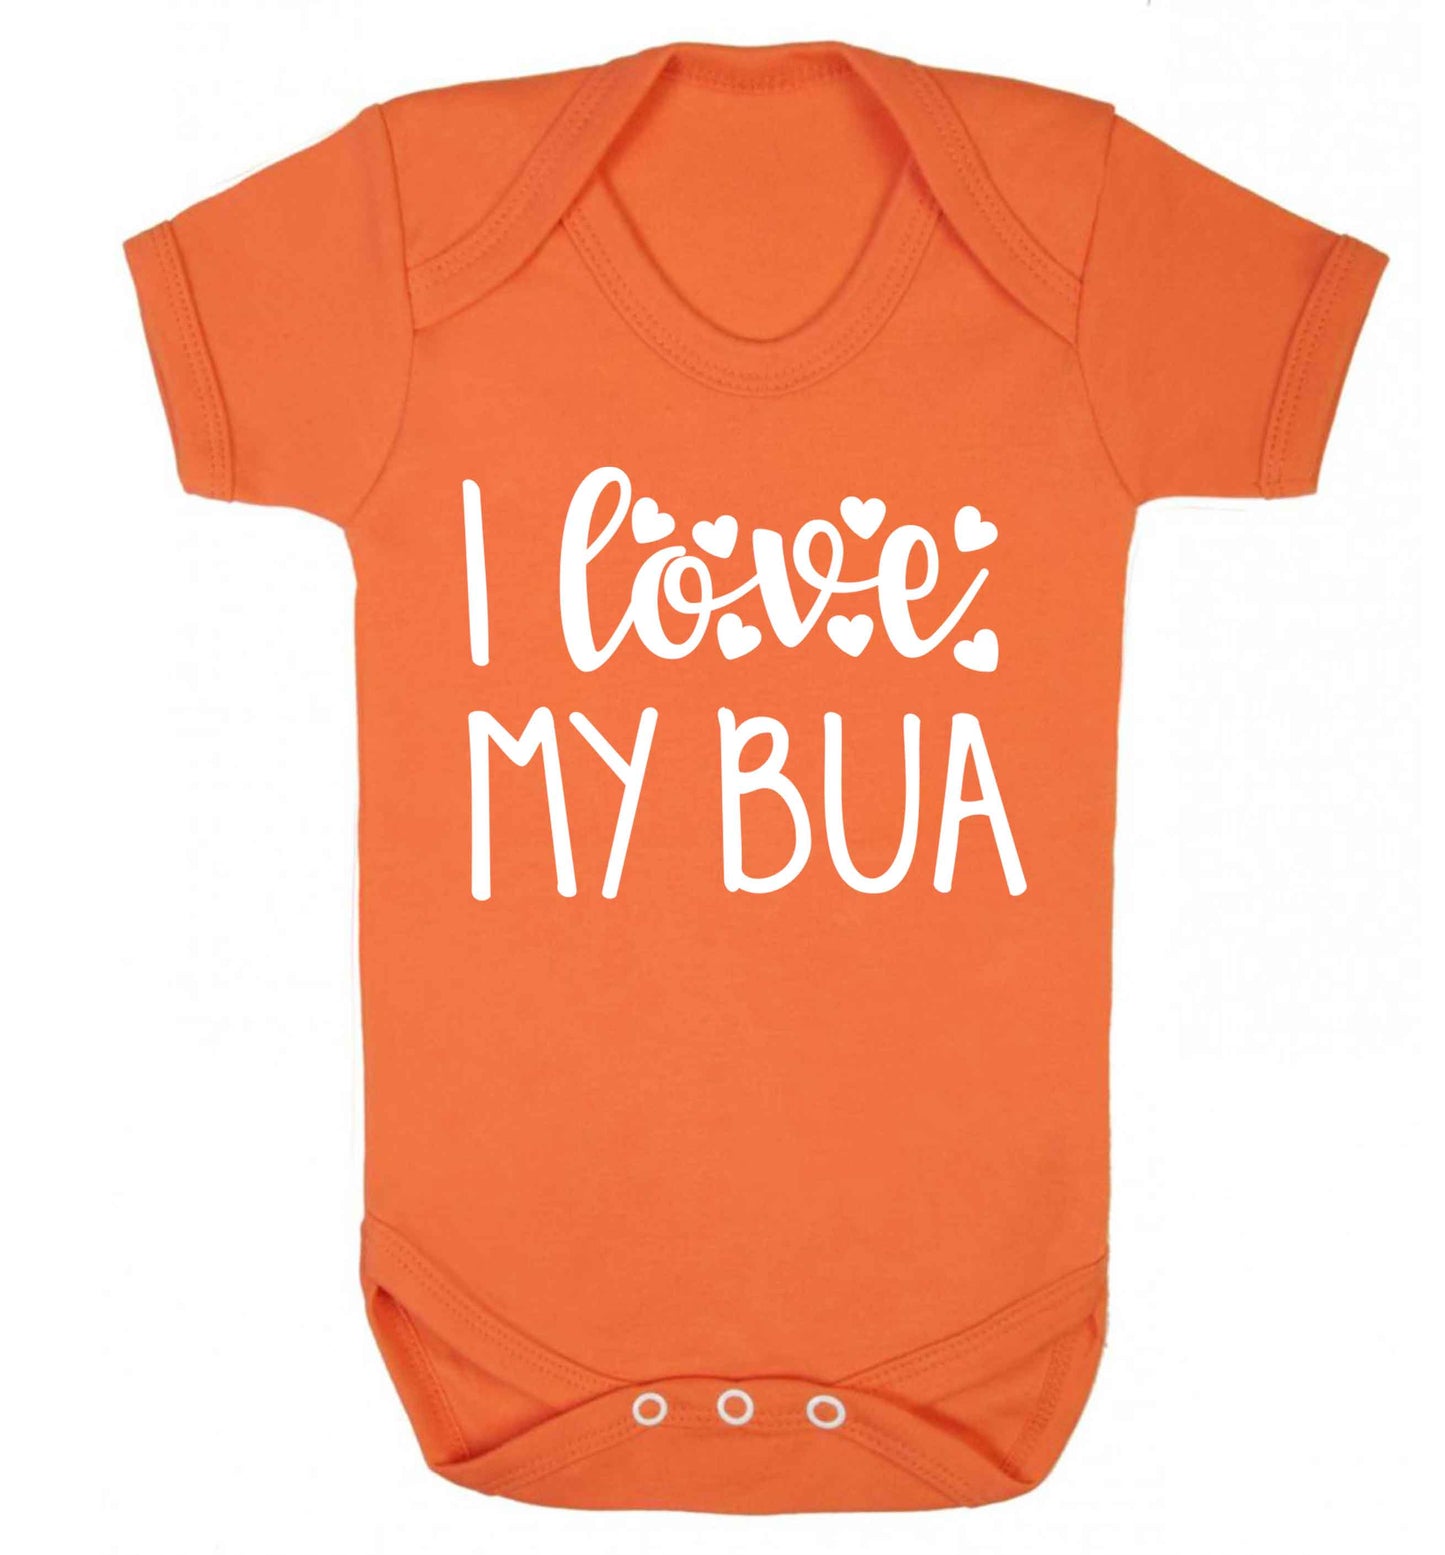 I love my bua Baby Vest orange 18-24 months